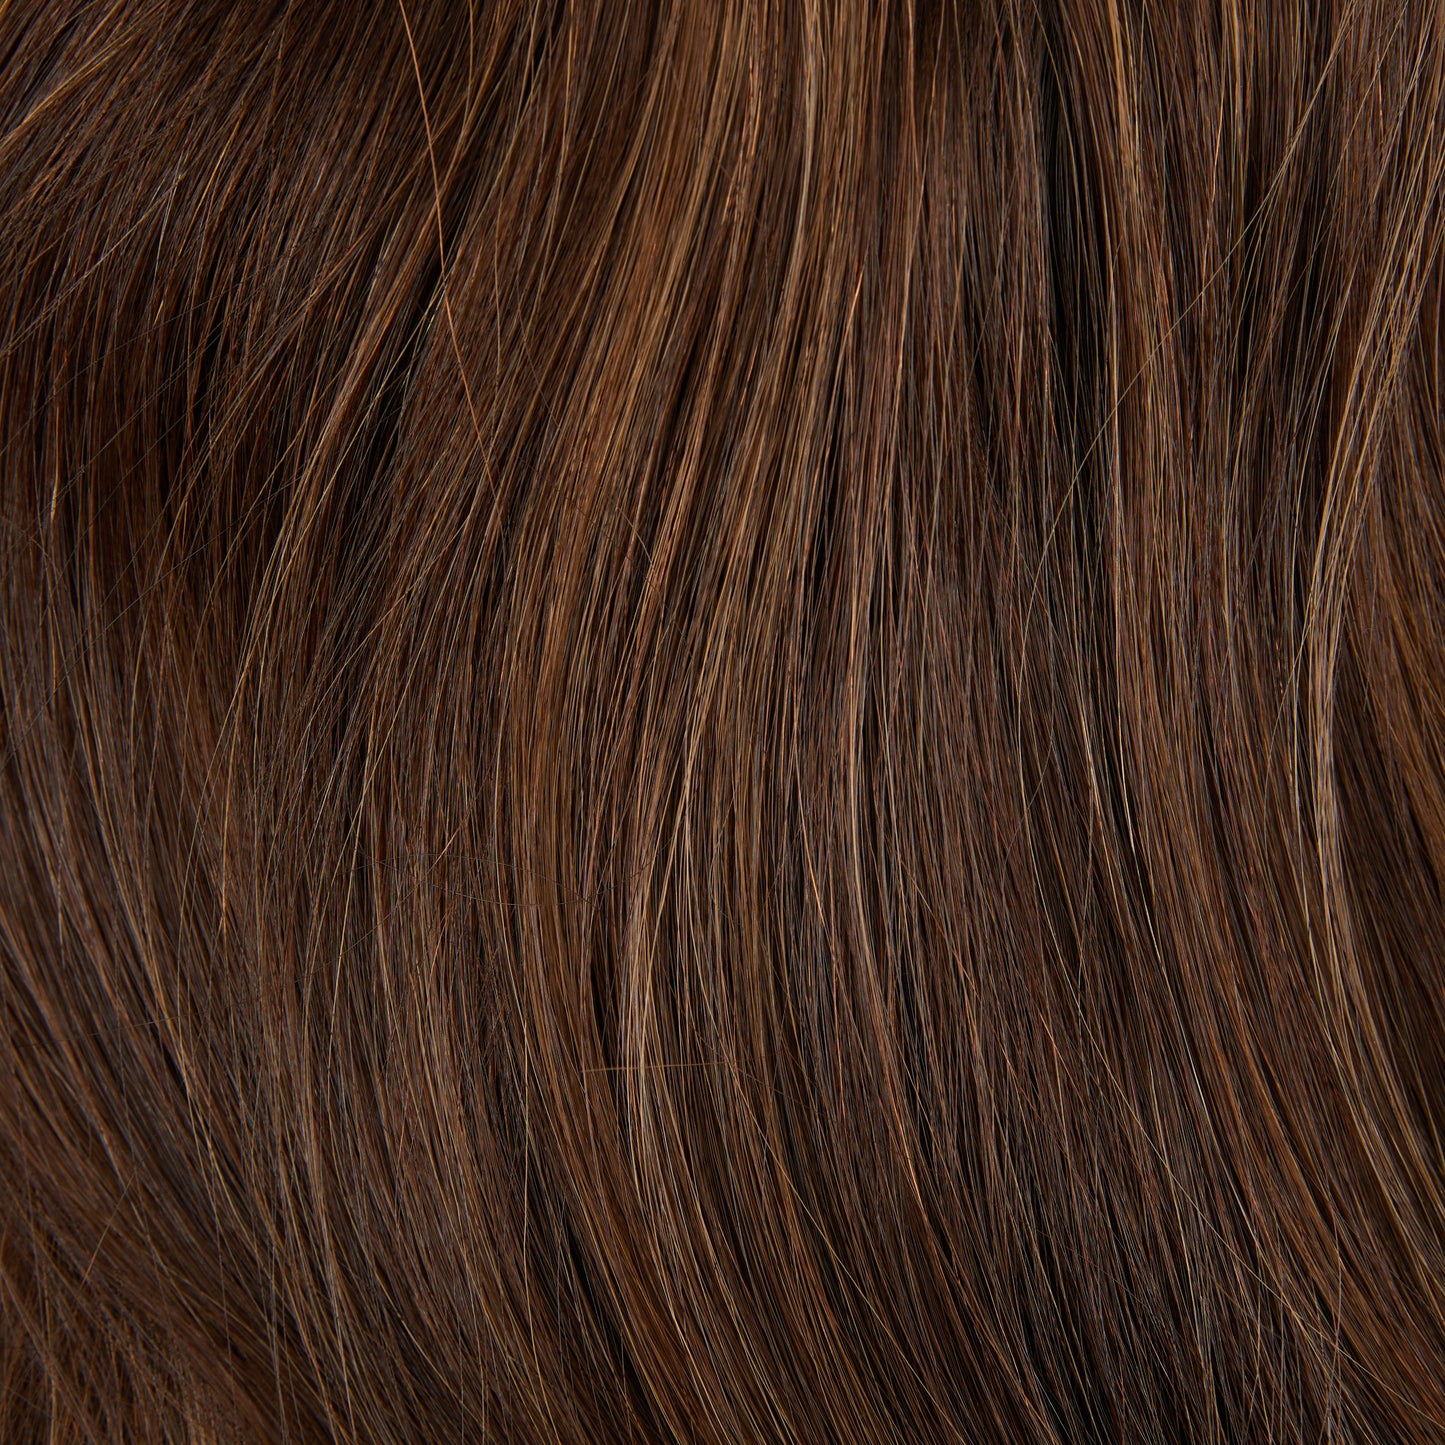 Medium Brown W/ Blond Highlights #12-4-6 French Wig